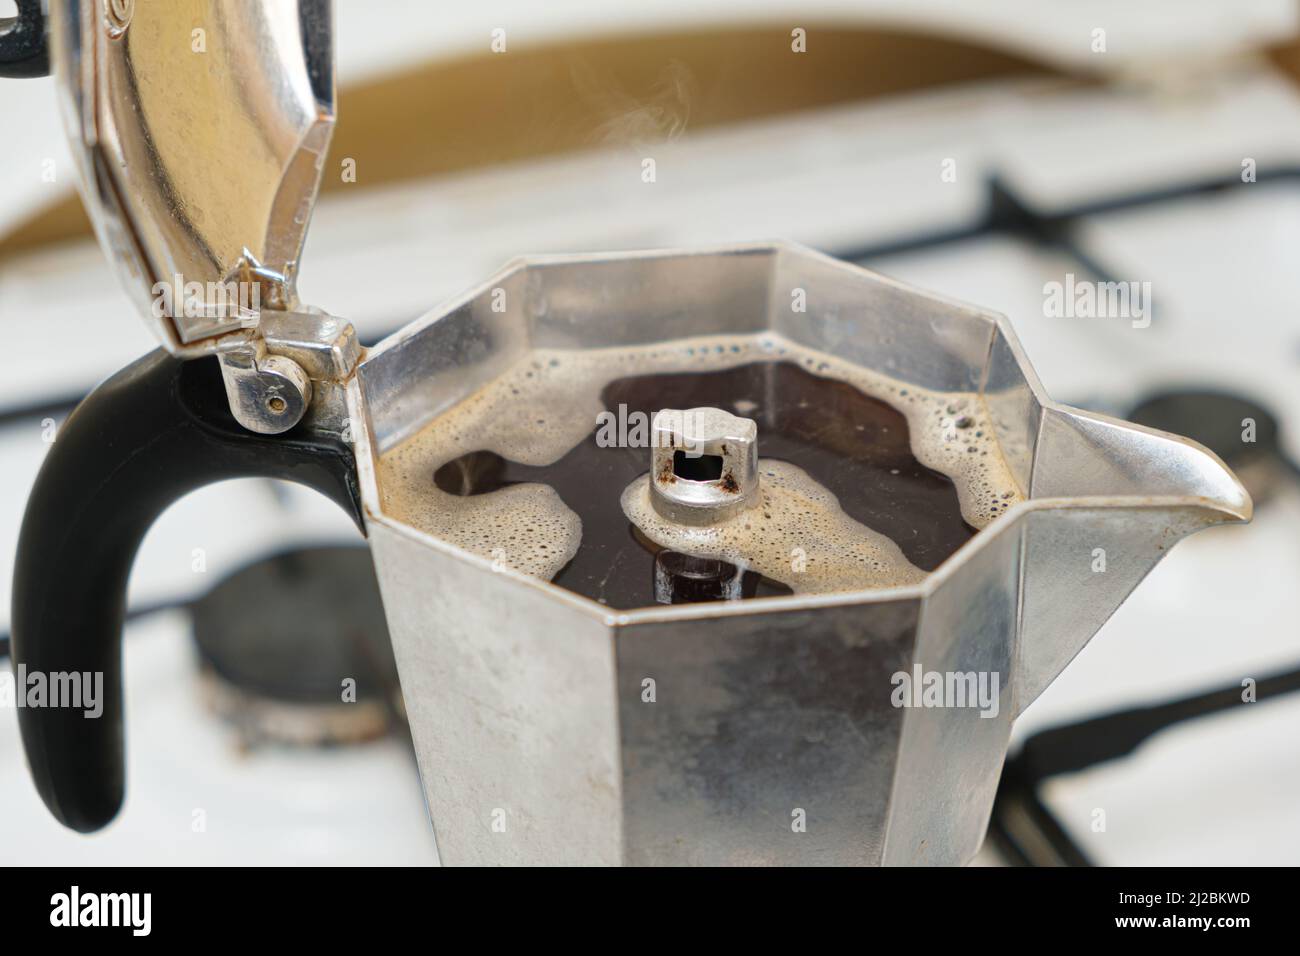 https://c8.alamy.com/comp/2J2BKWD/hot-freshly-brewed-coffee-in-a-geyser-coffee-maker-standing-on-a-gas-stove-2J2BKWD.jpg